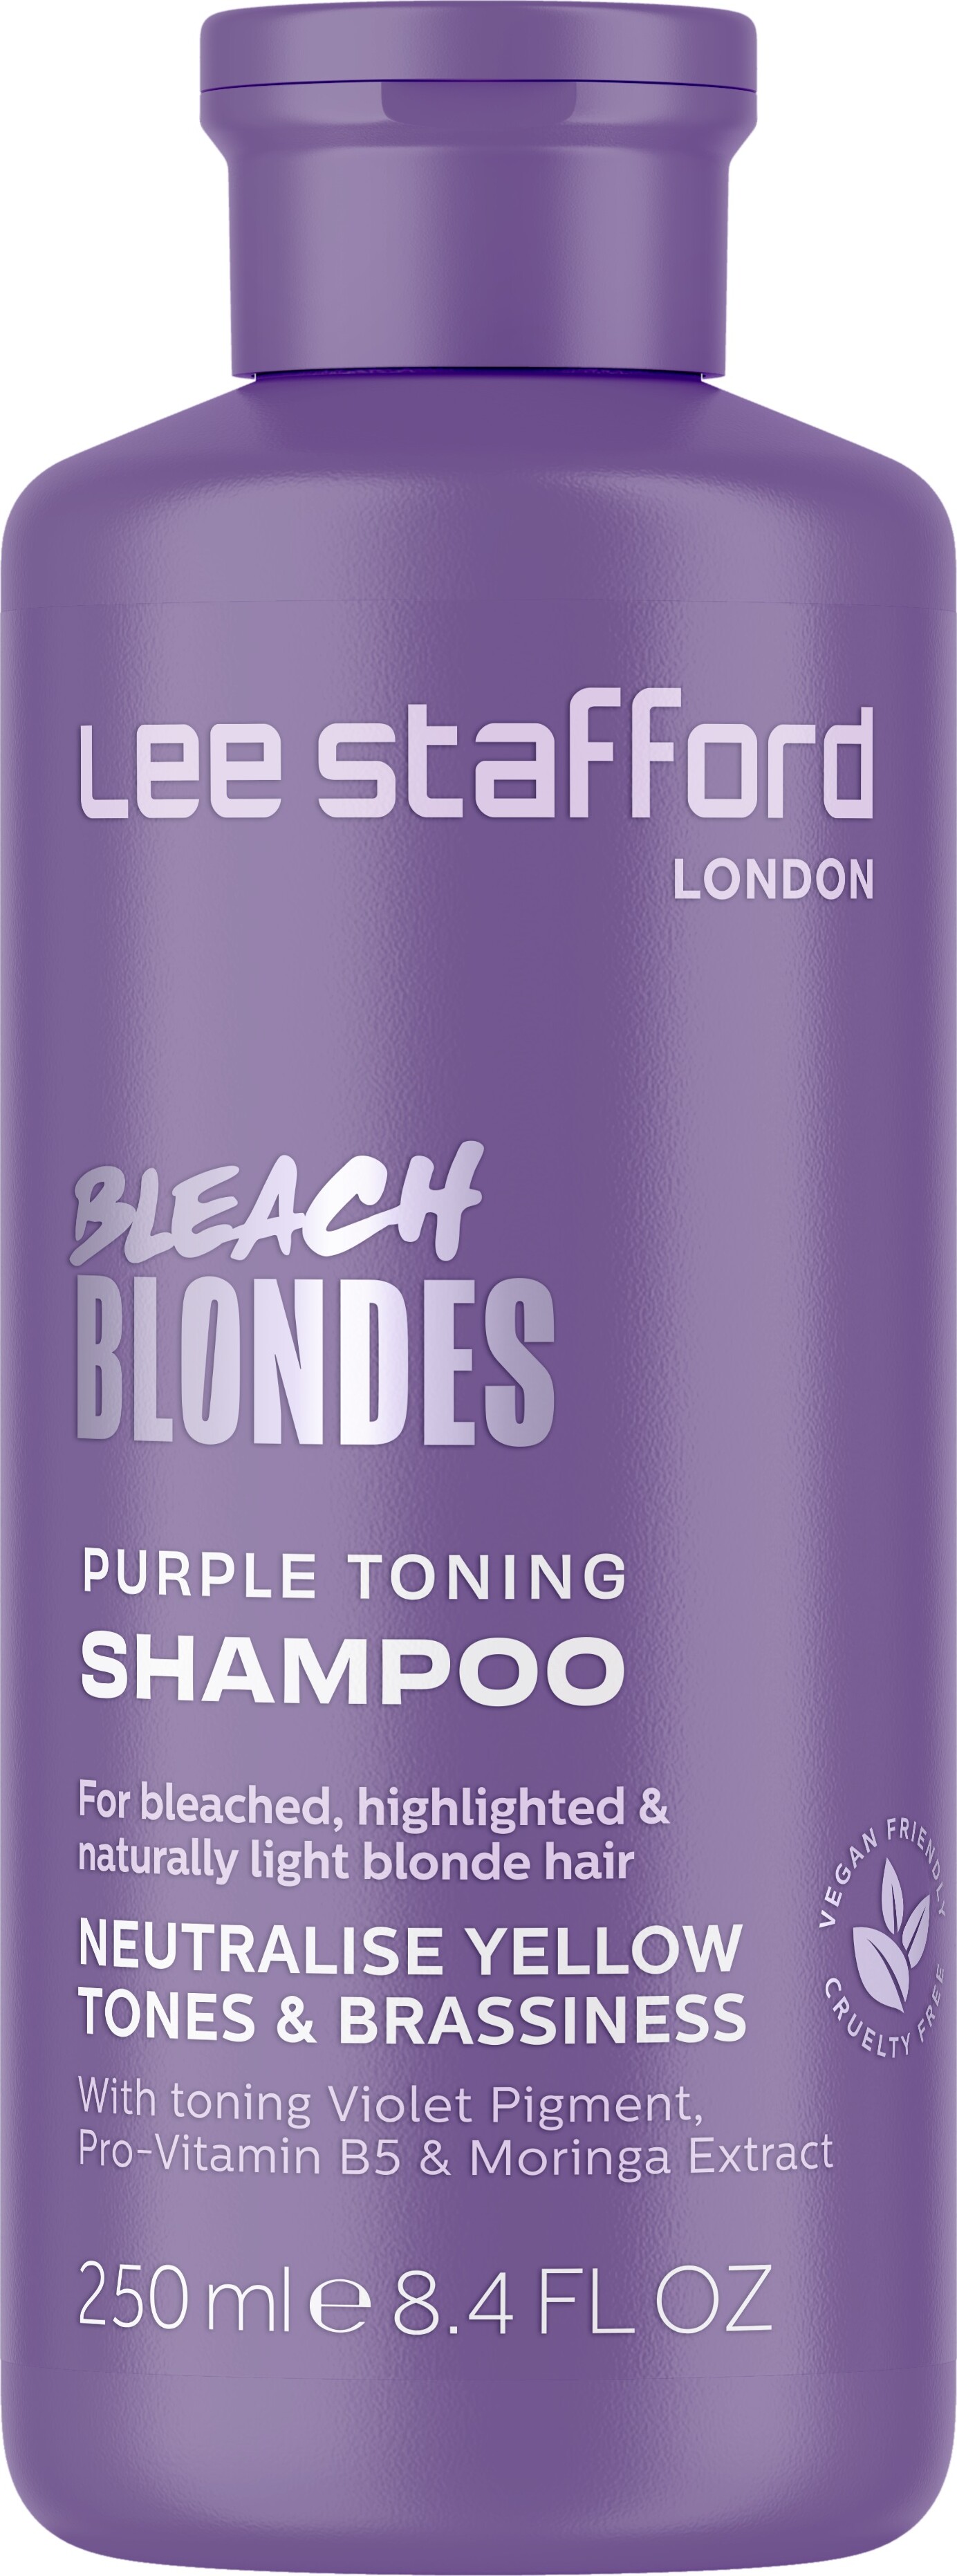 Se Lee Stafford - Bleach Blondes Purple Toning Shampoo - 250 Ml hos Gucca.dk